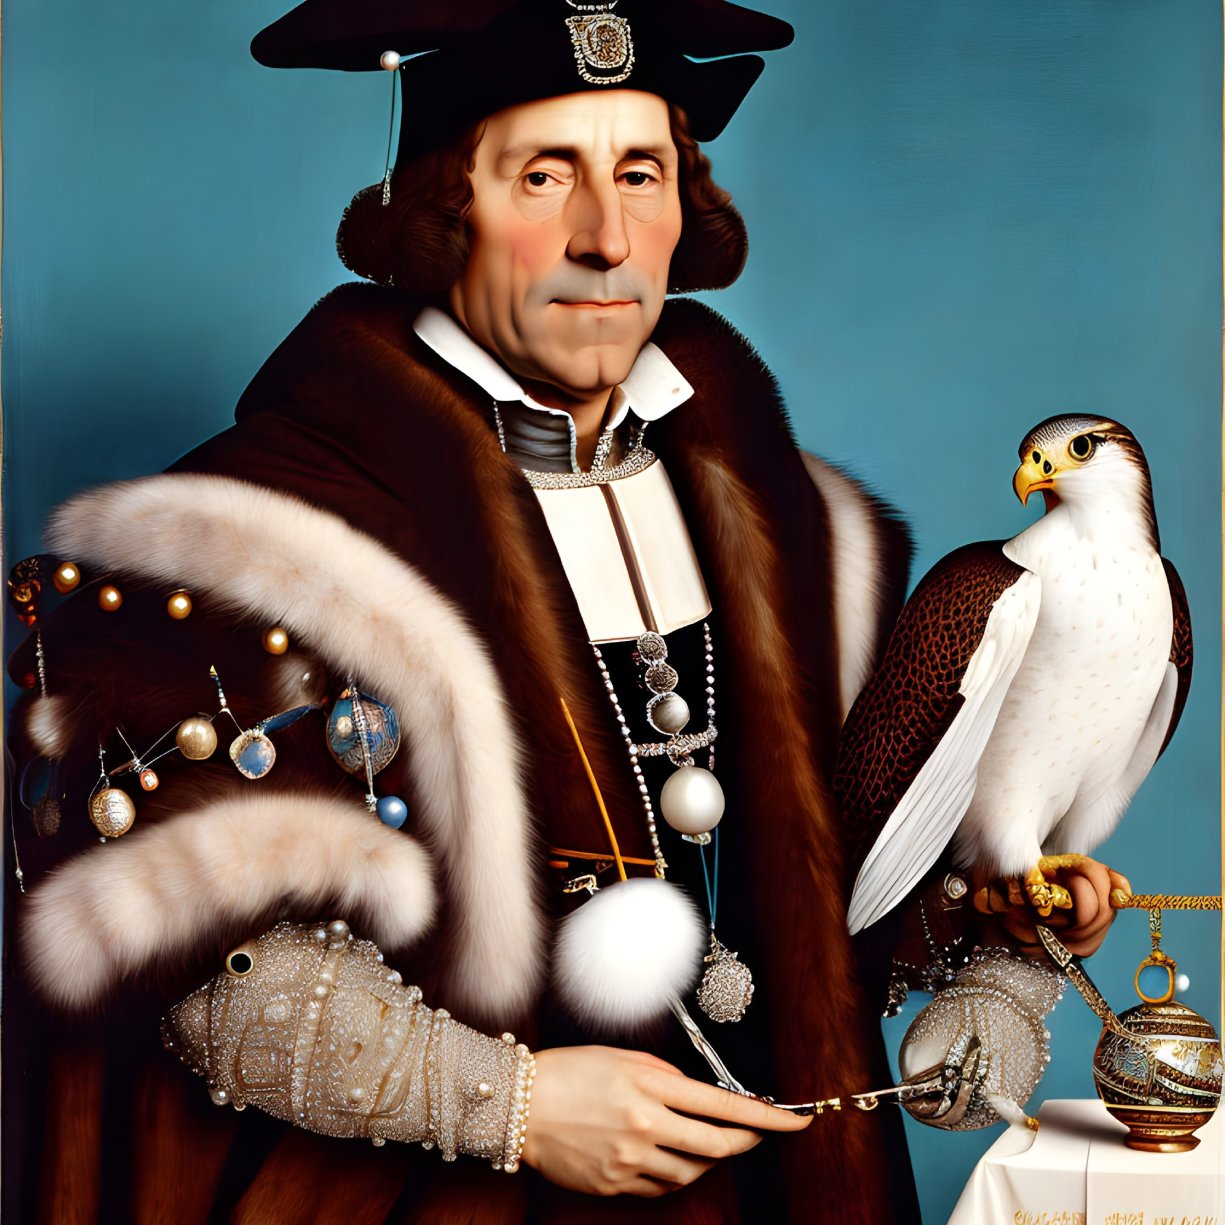 Aristocratic man in fur cloak with falcon, solemn expression